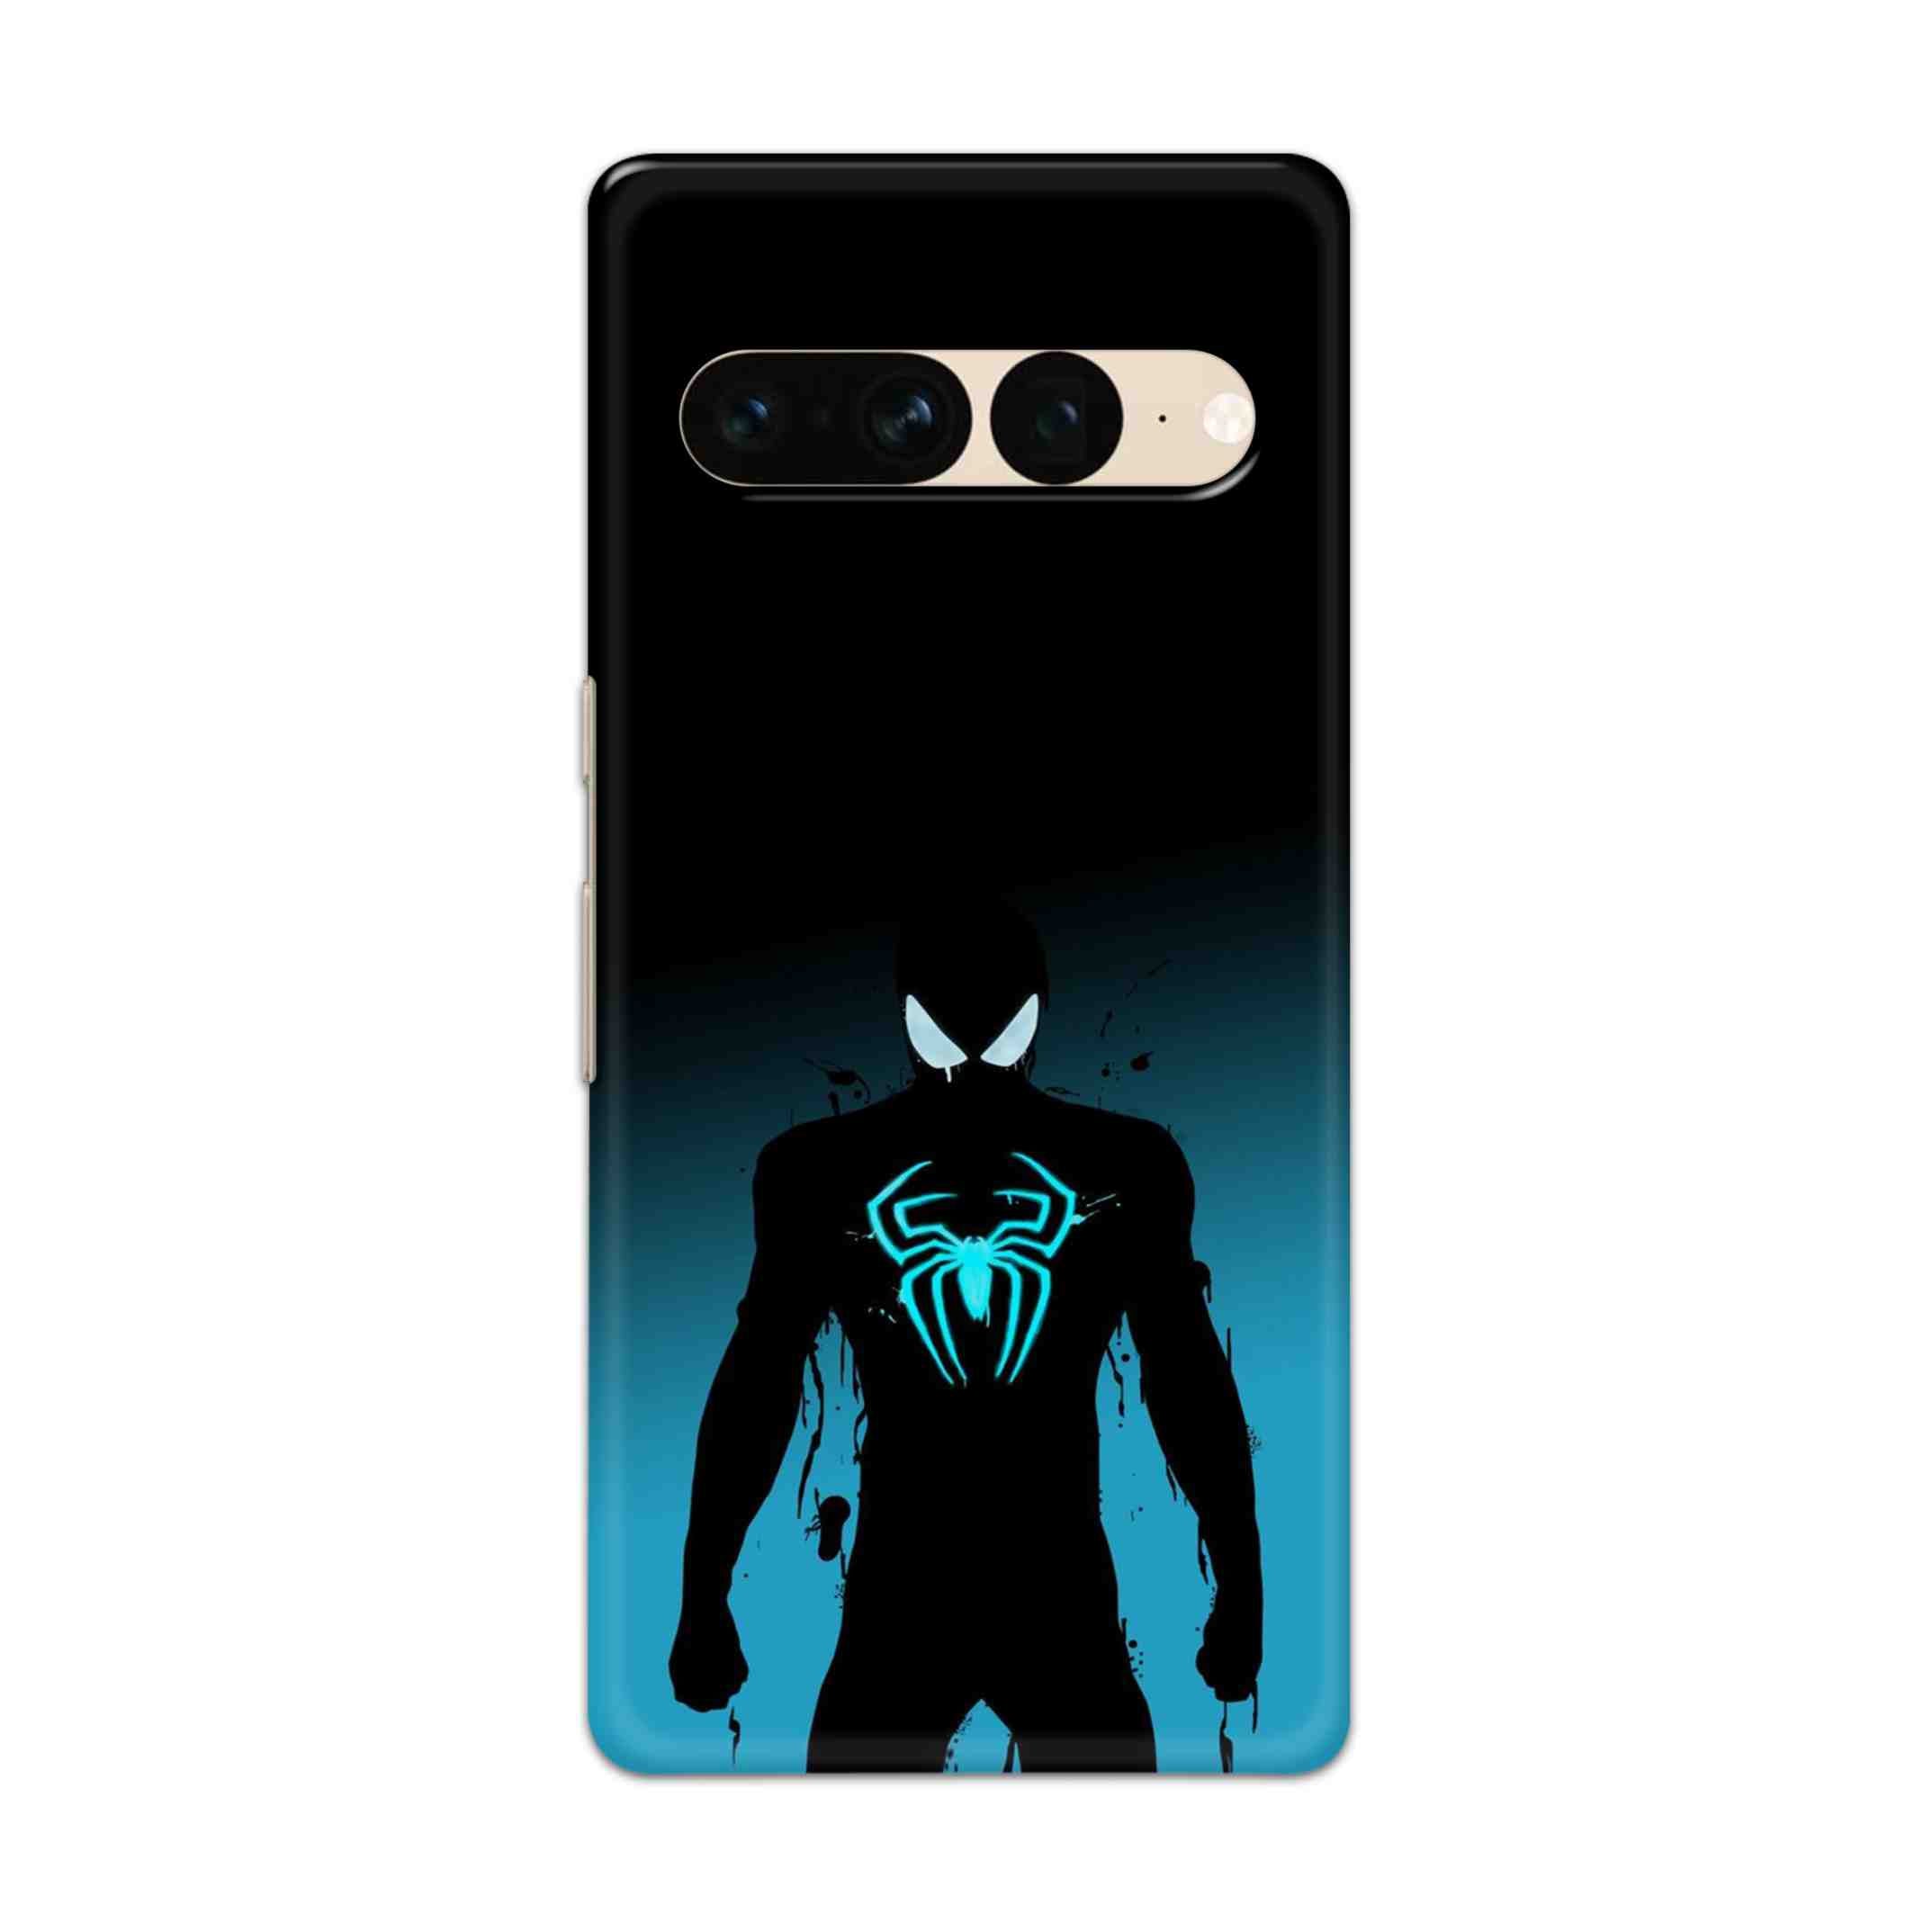 Buy Neon Spiderman Hard Back Mobile Phone Case Cover For Google Pixel 7 Pro Online